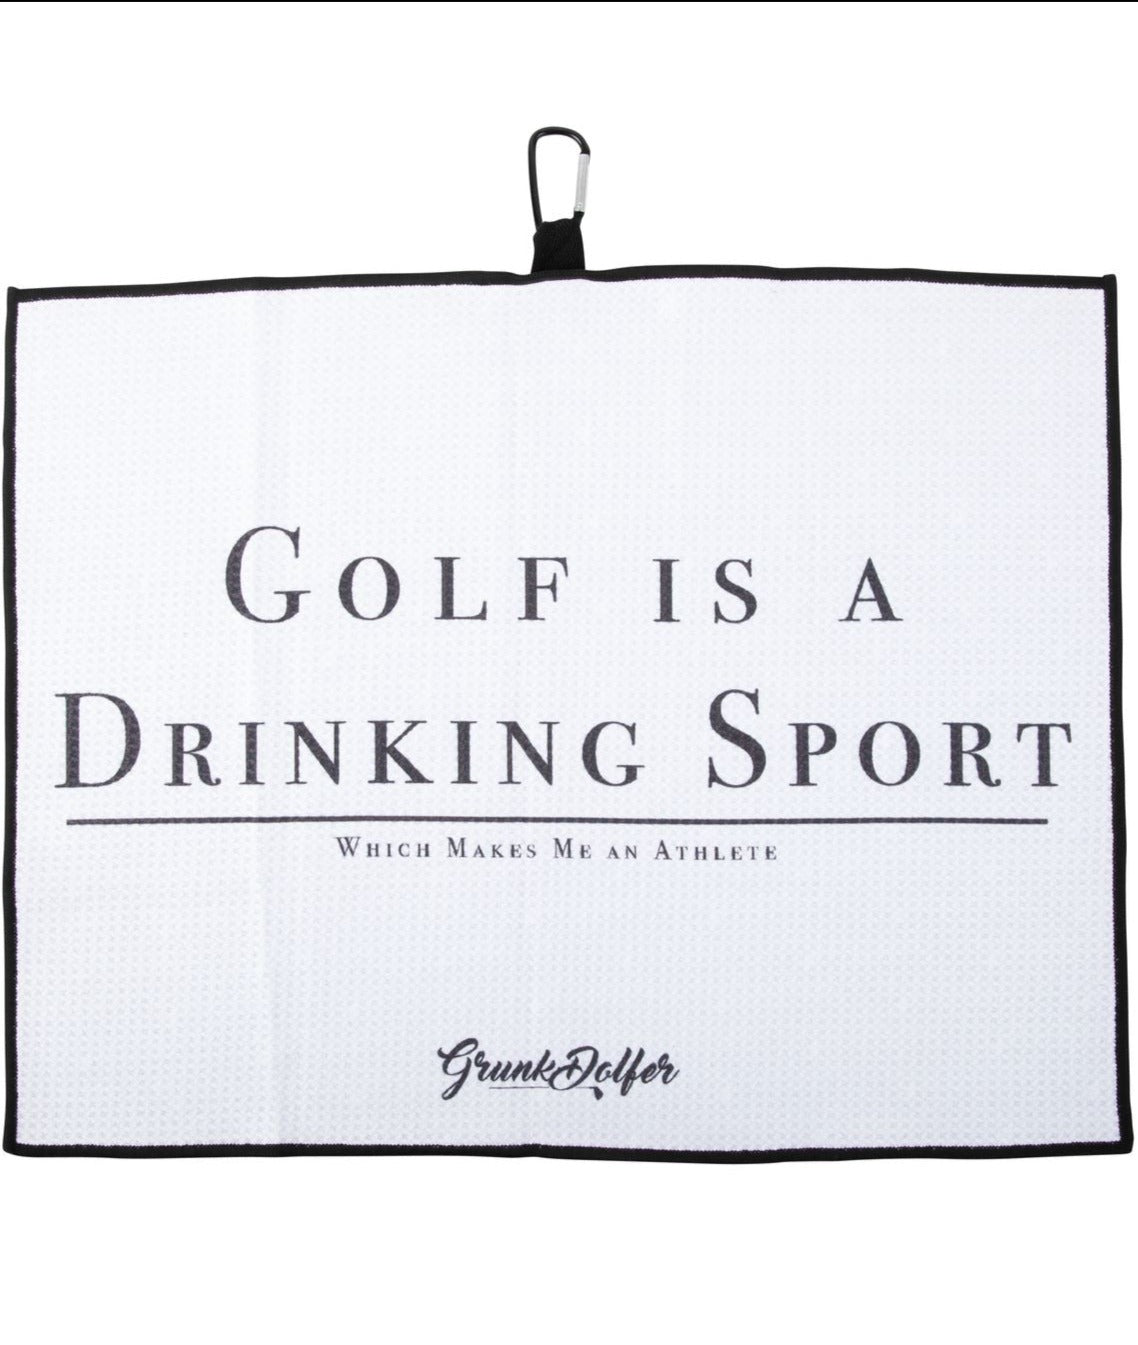 Golf is a Drinking Sport Towel